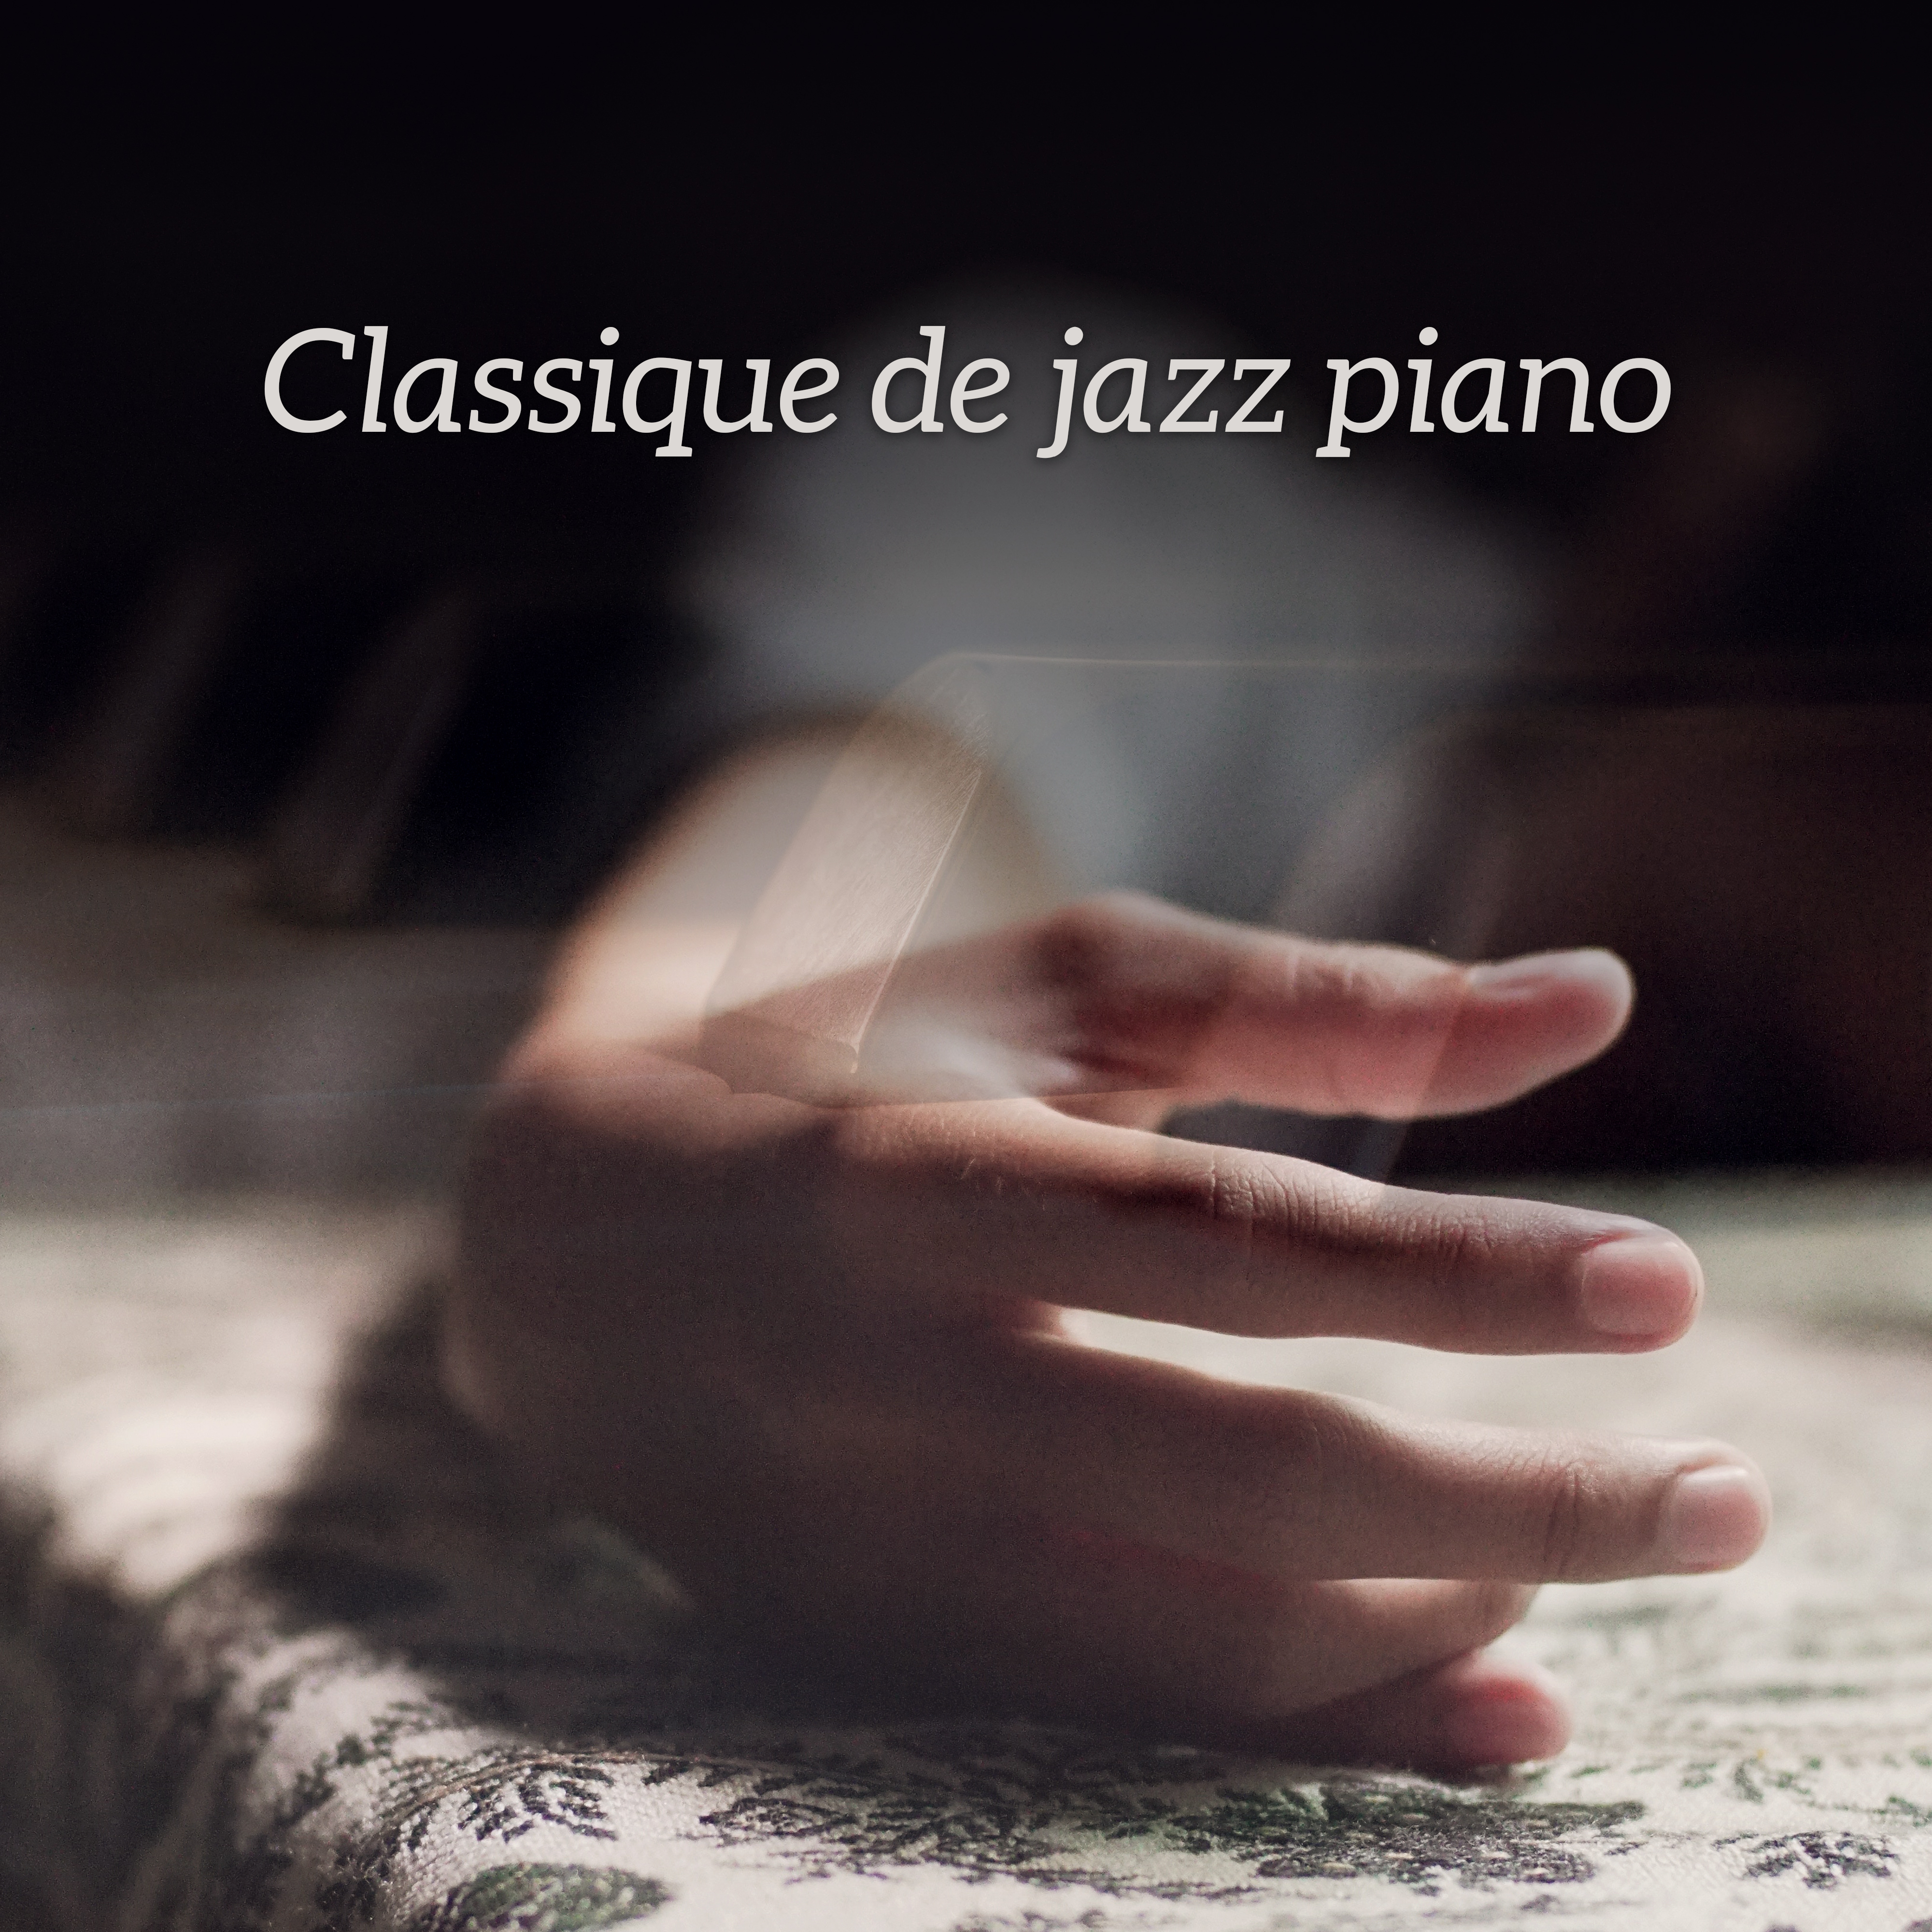 Classique de jazz piano